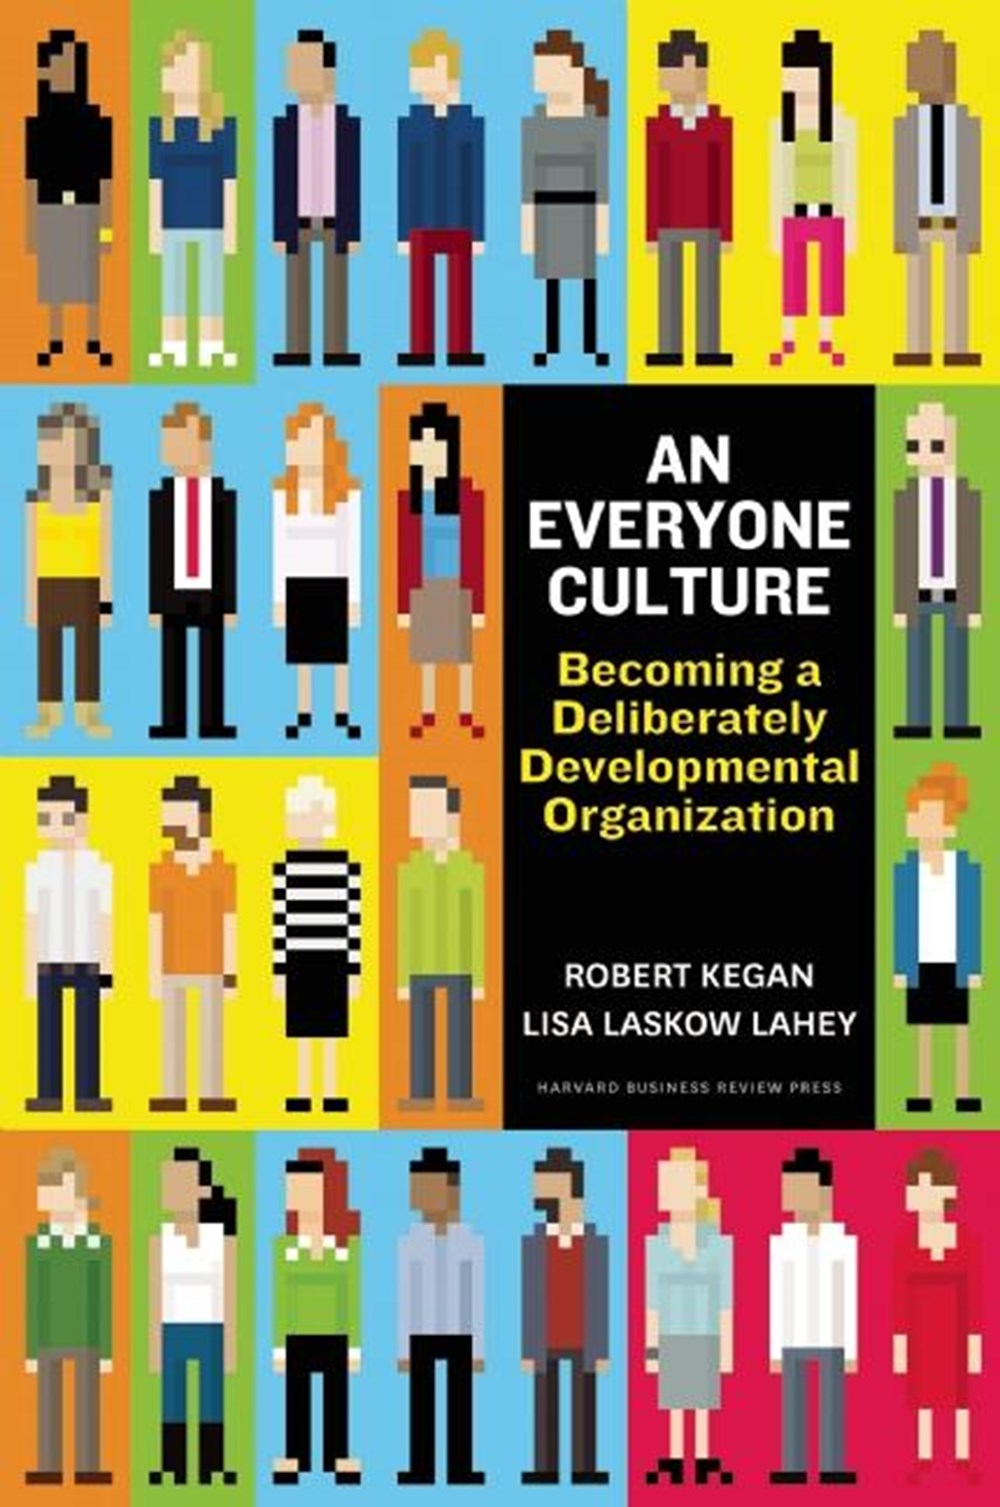 Everyone Culture Becoming a Deliberately Developmental Organization